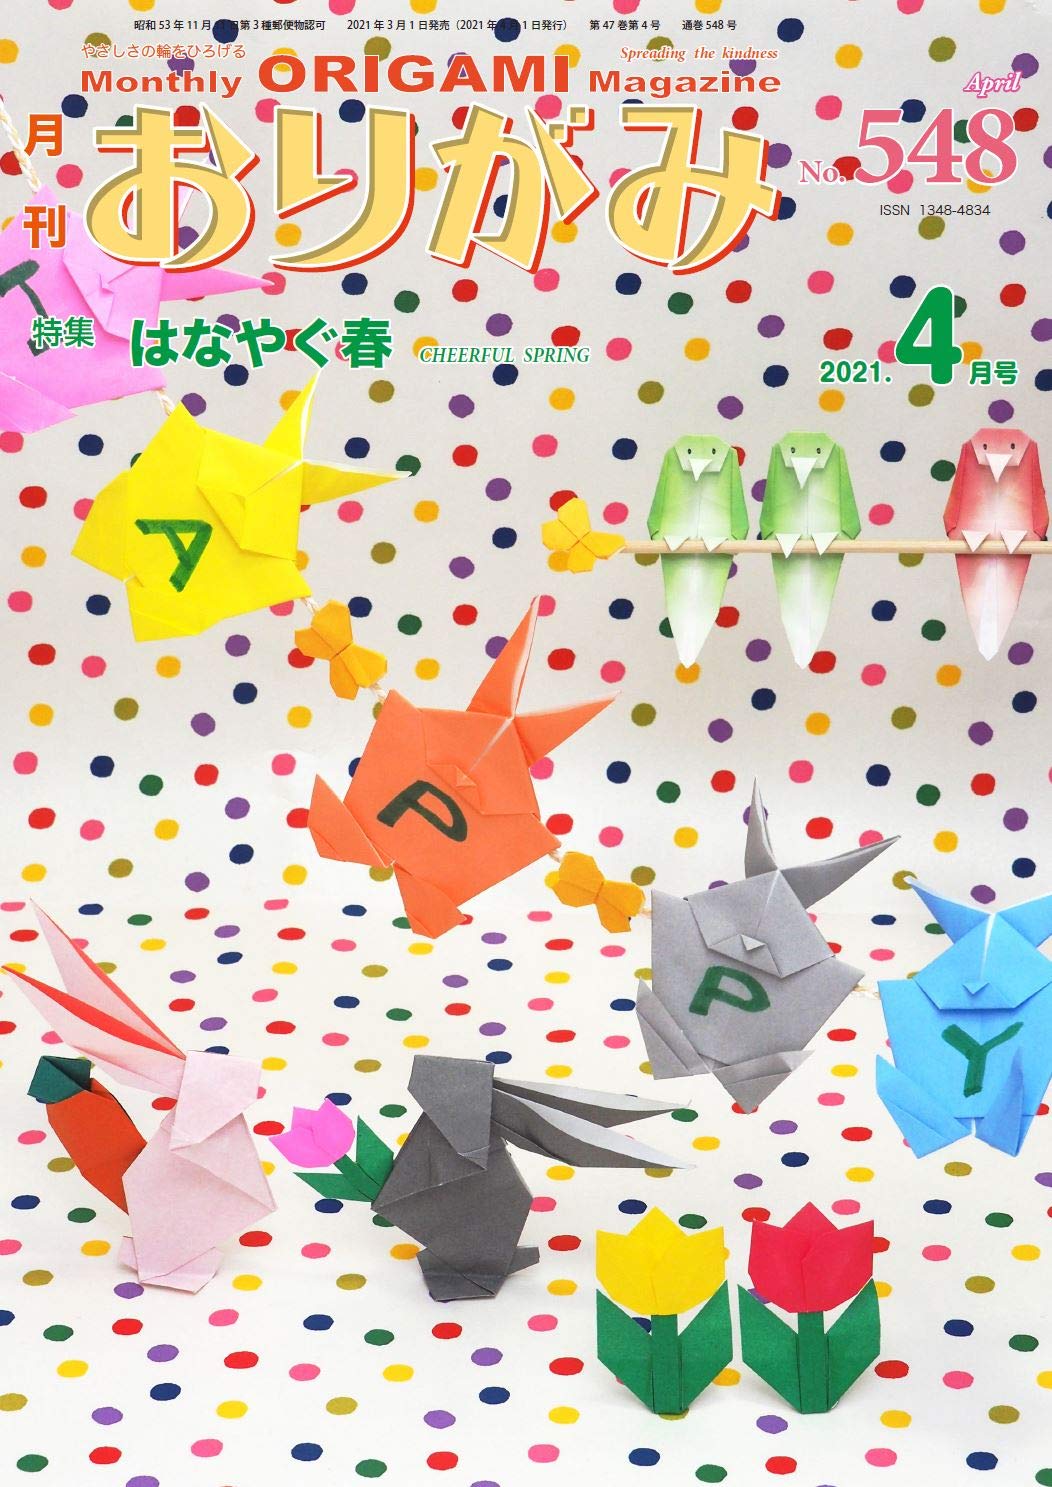 Monthly Origami Magazine #548 - April 2021